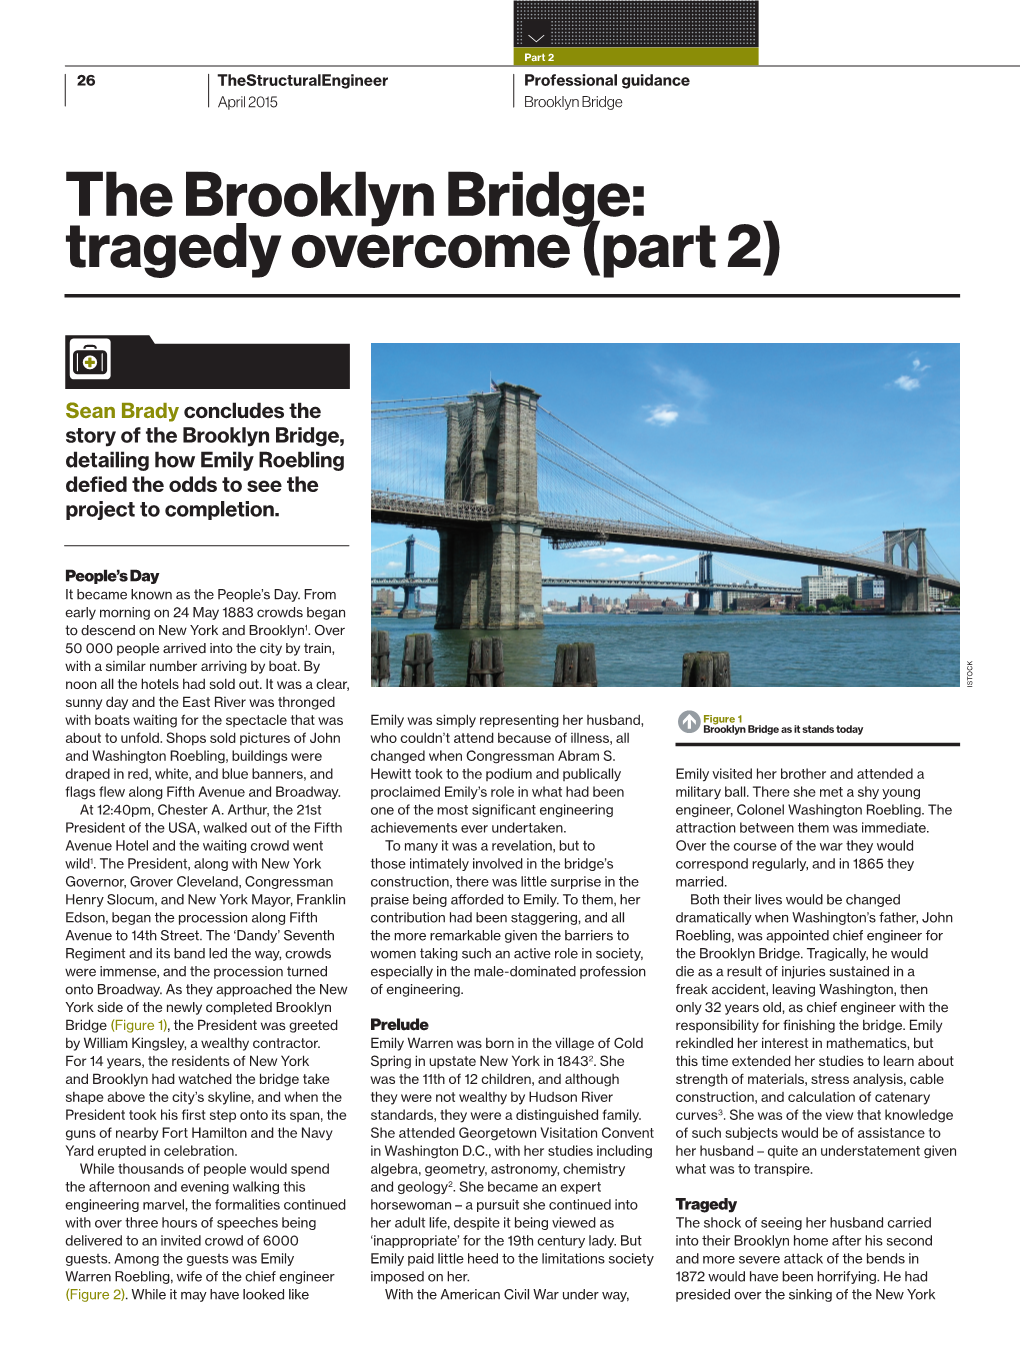 The Brooklyn Bridge: Tragedy Overcome (Part 2)